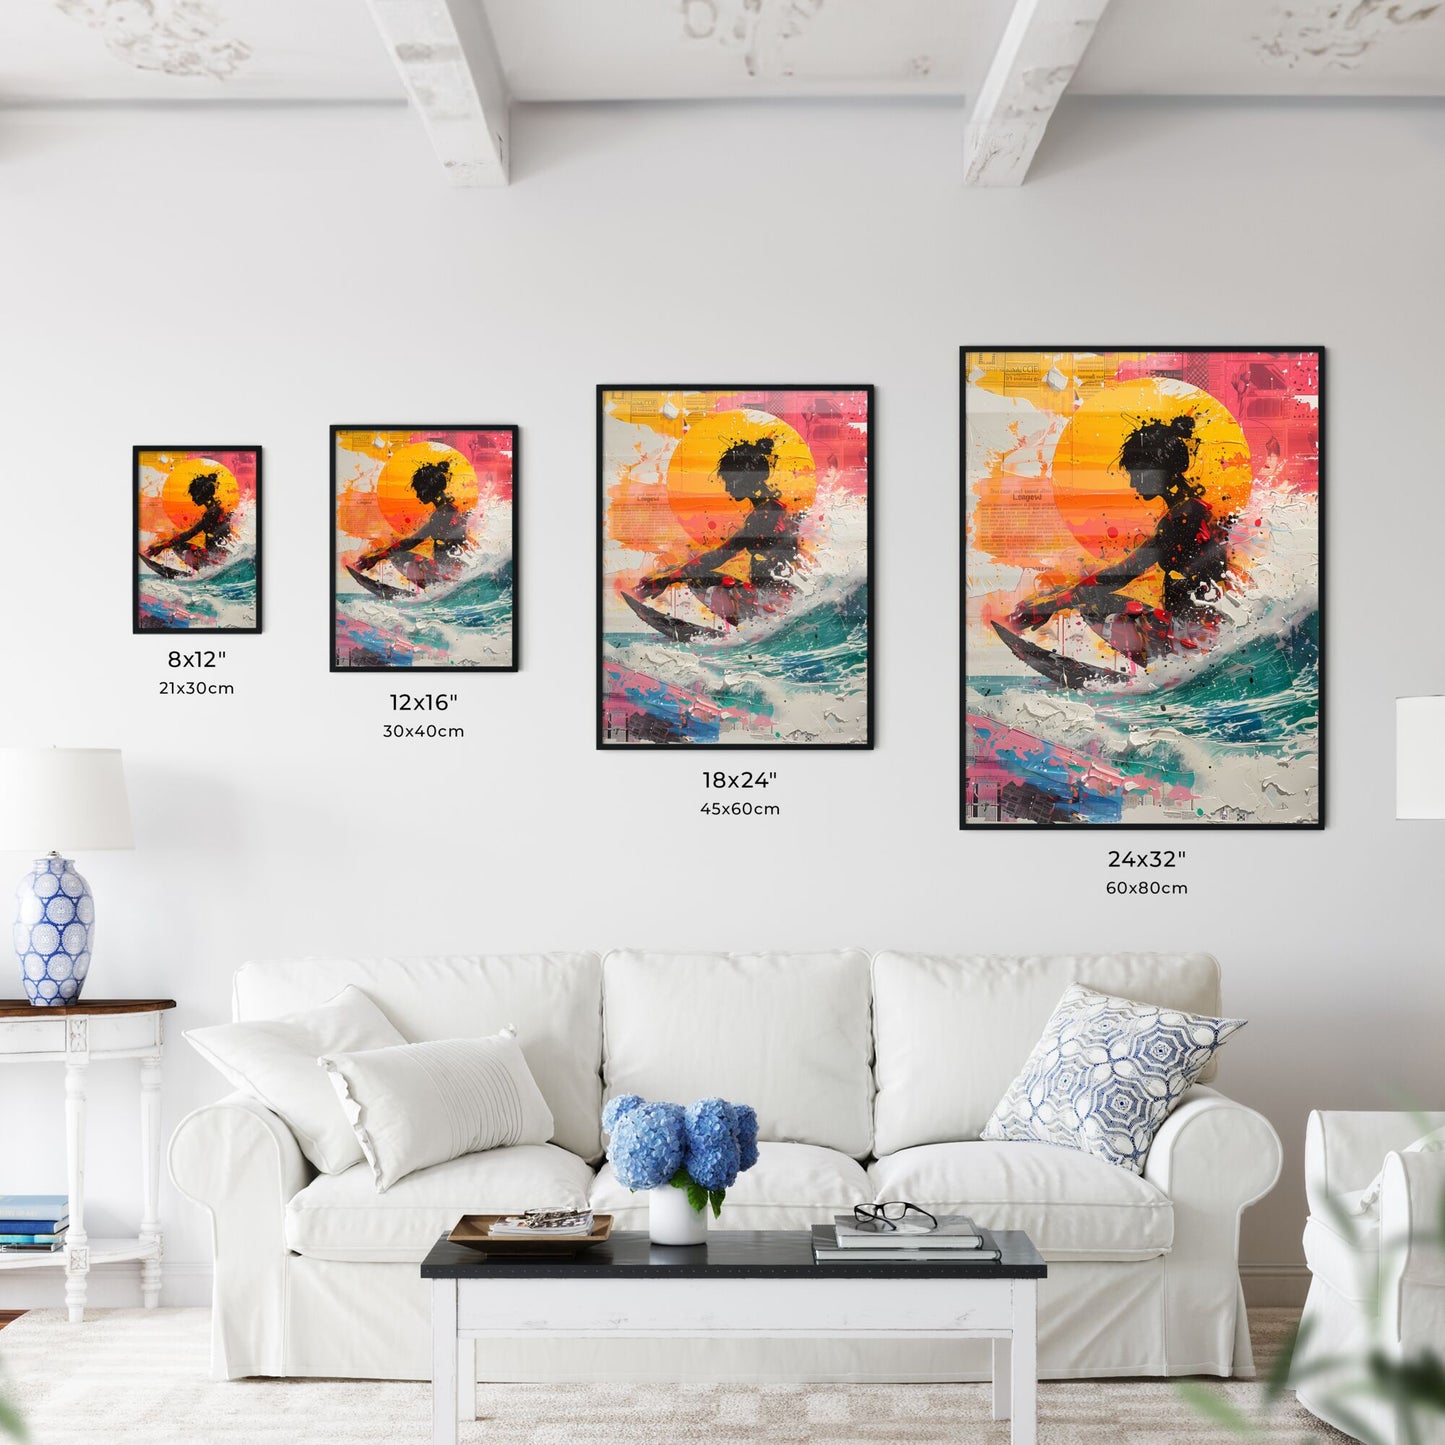 Birth of Venus Screen Print Trash Pop Art Painting Vibrant Surfing Woman Default Title